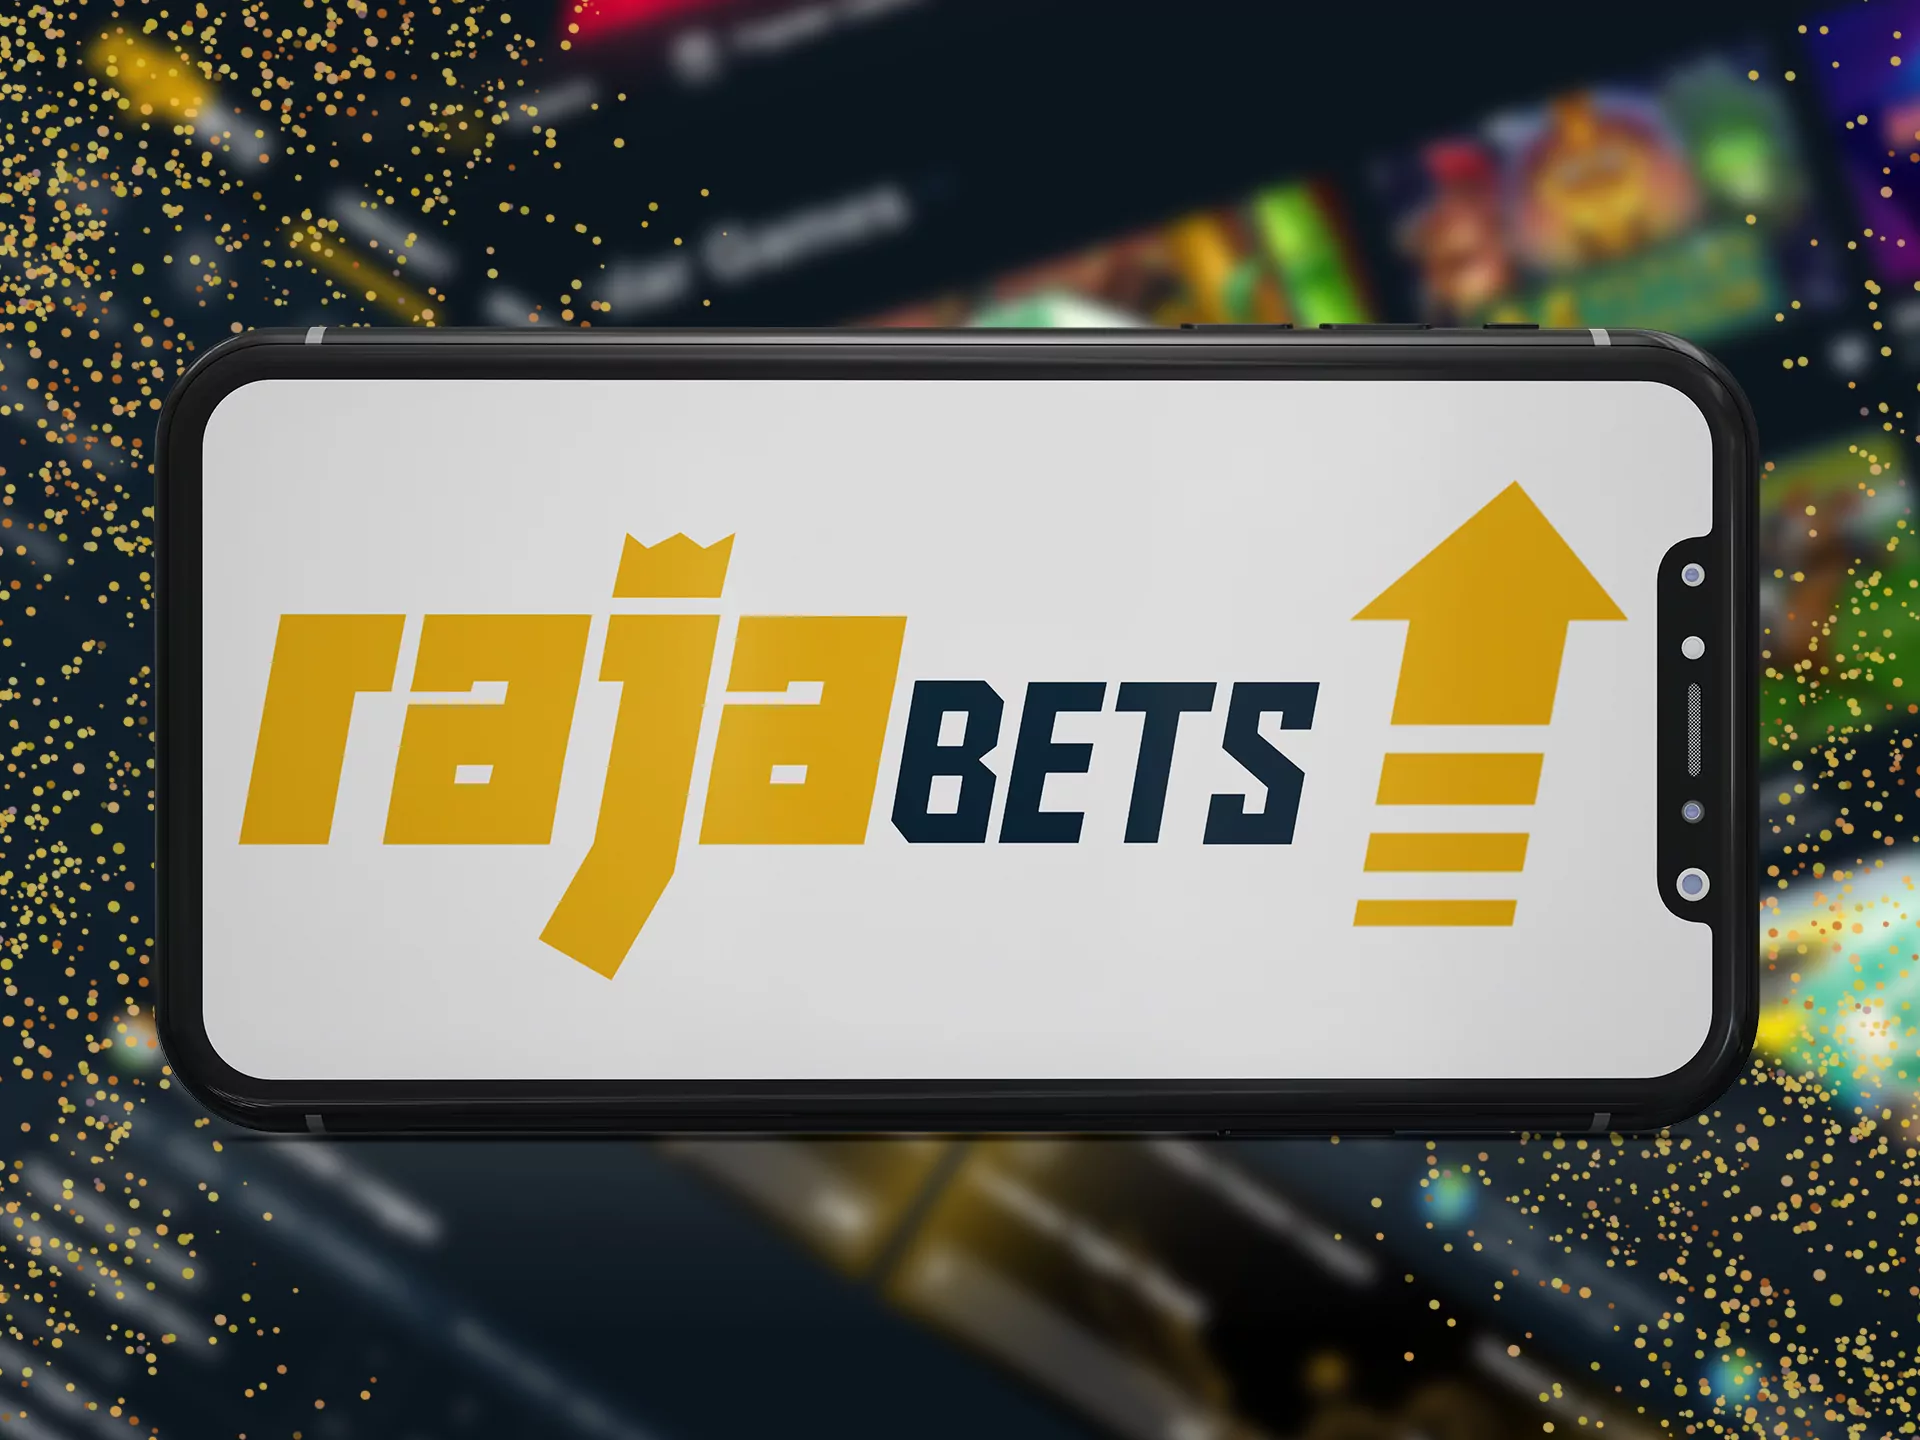 Update Rajabets app for start betting faster.